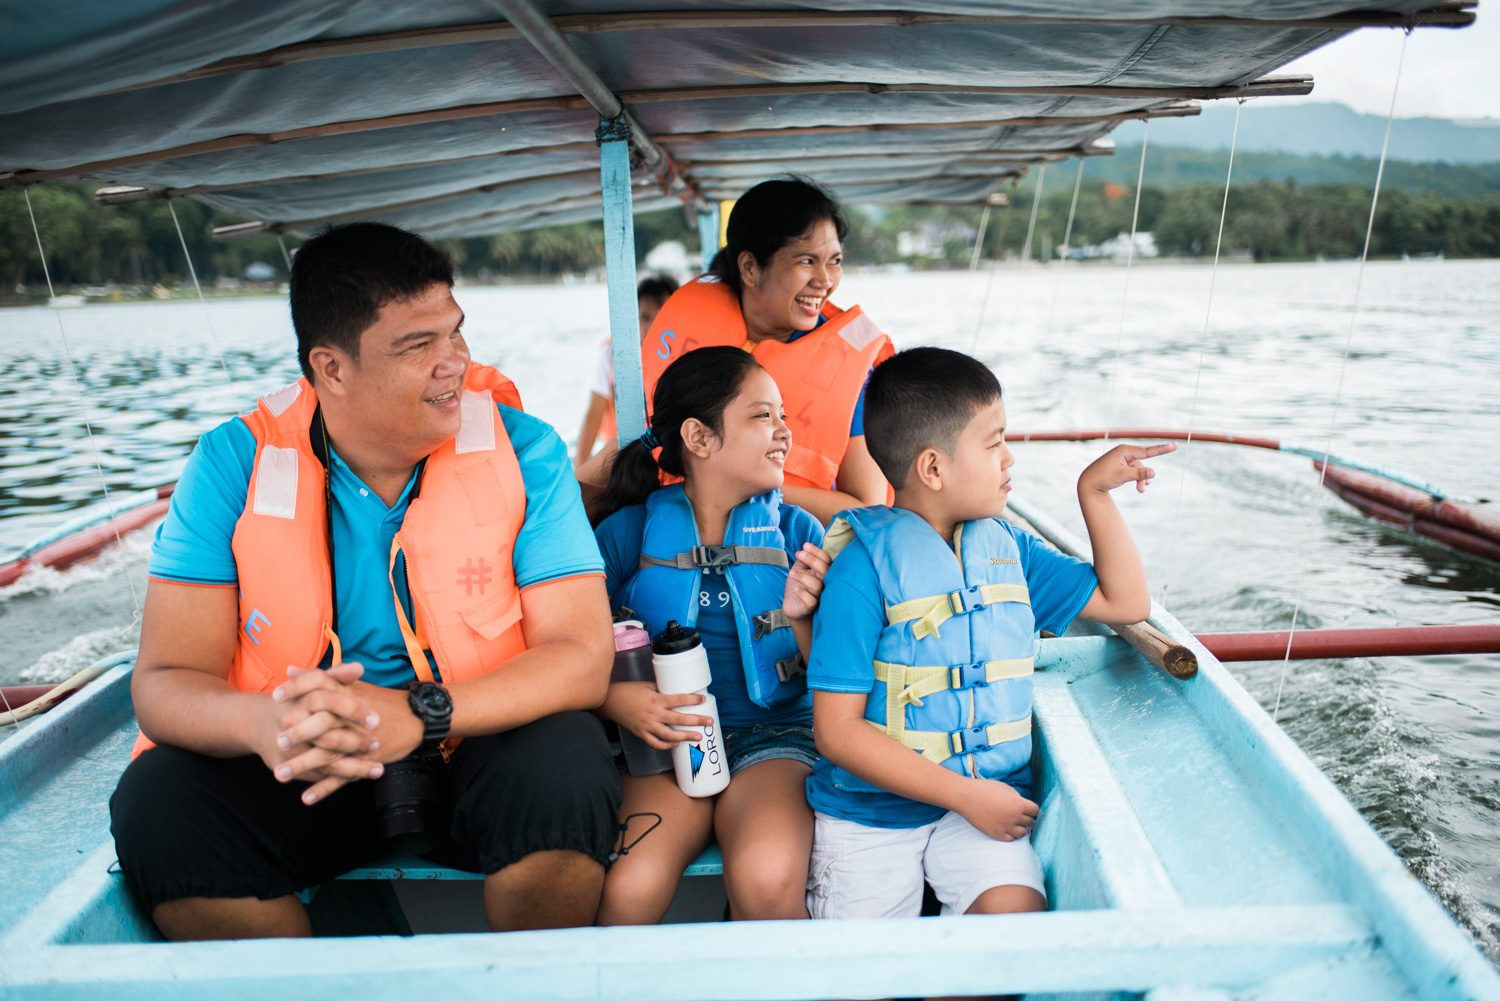 OUT AT SEA. The Bonifacio family rides a boat to Taal Volcano 